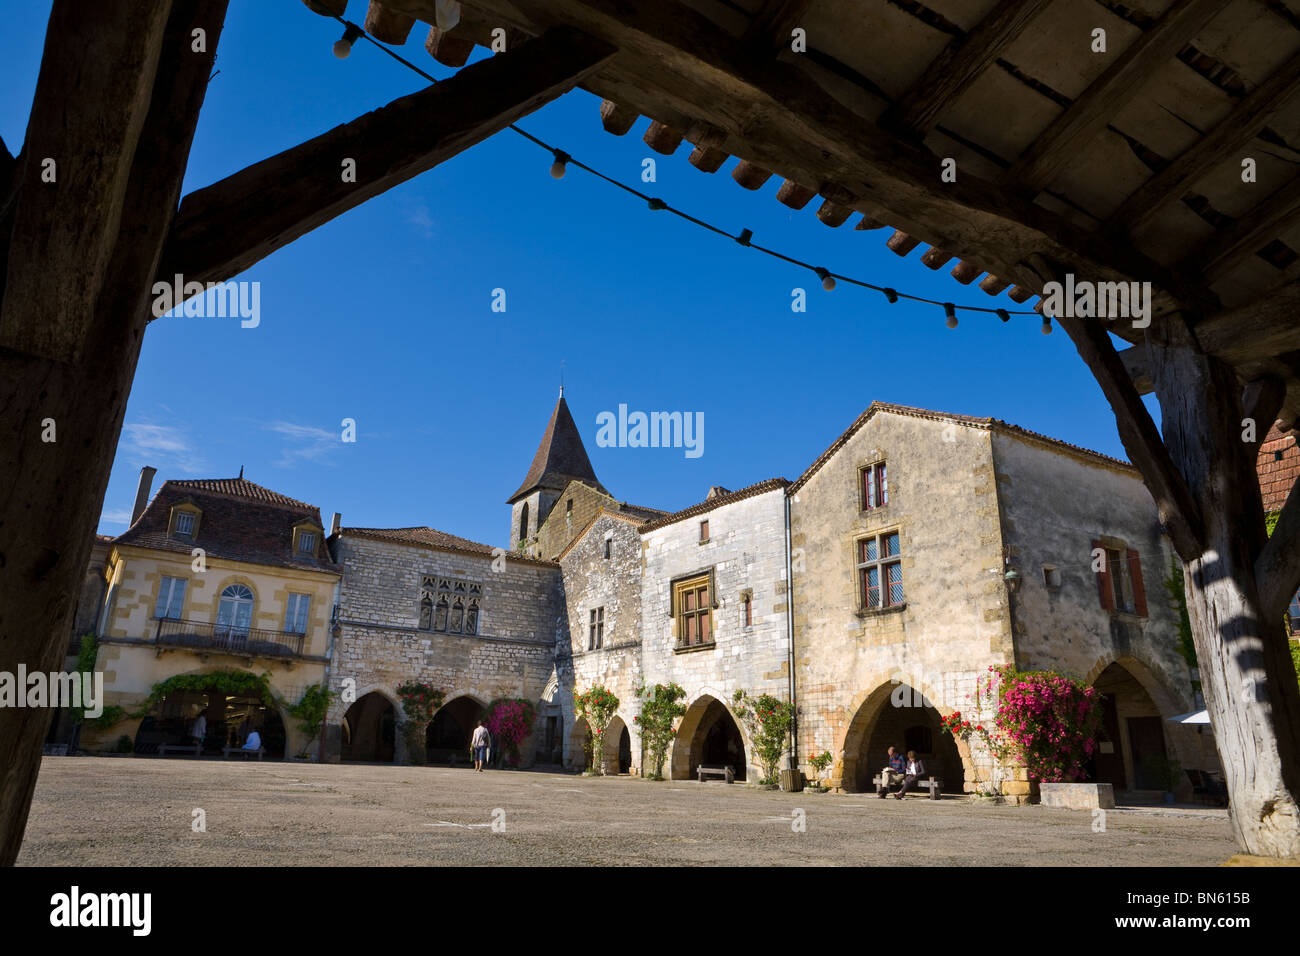 Central square, Monpazier, Dordogne, France Stock Photo